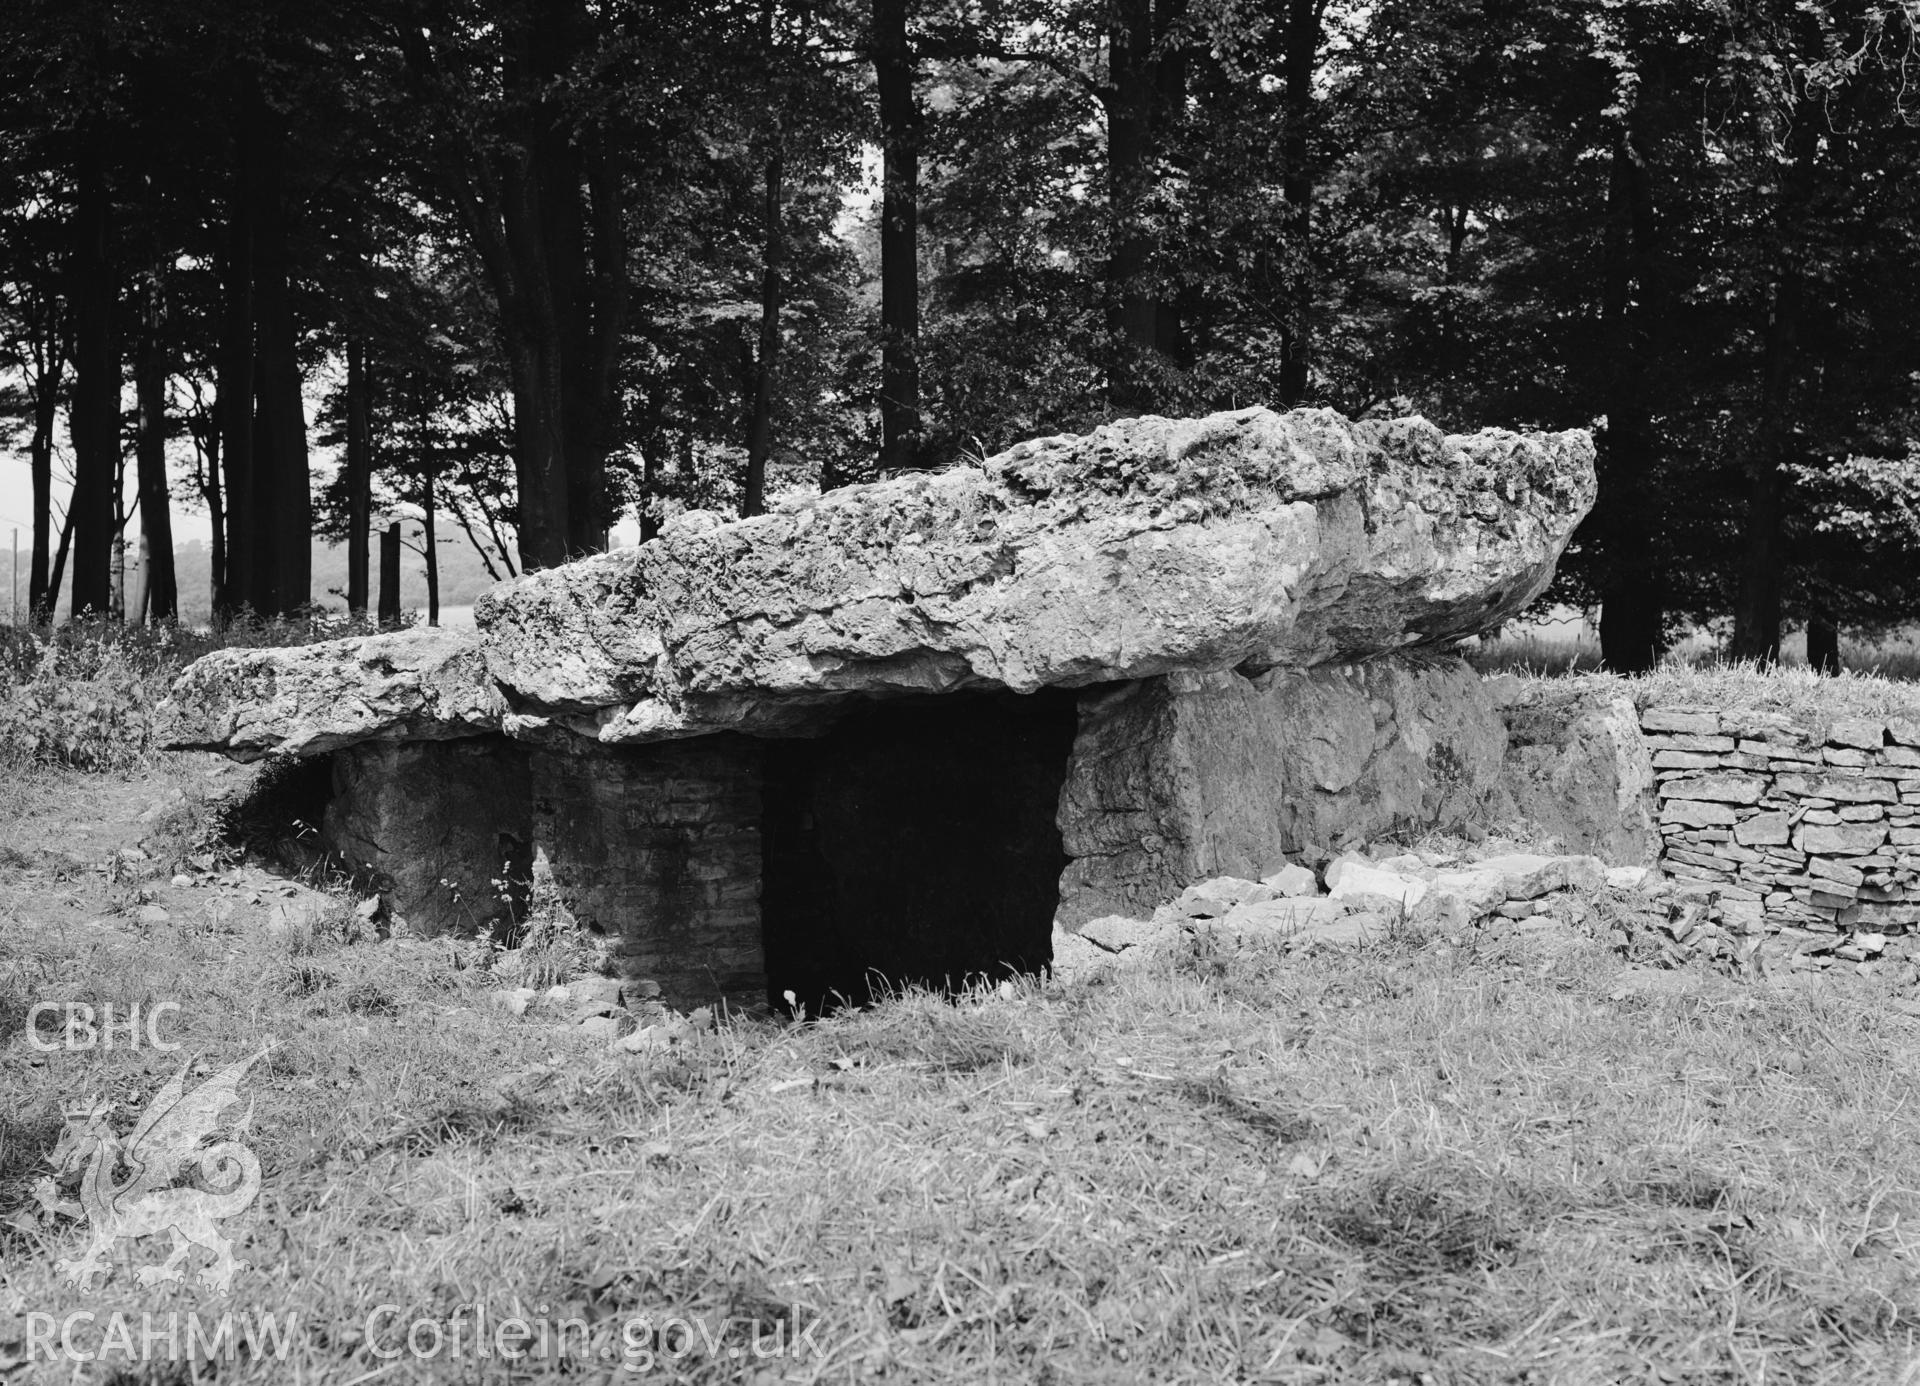 D.O.E photograph of Tinkinswood Burial Chamber, Glamorgan.